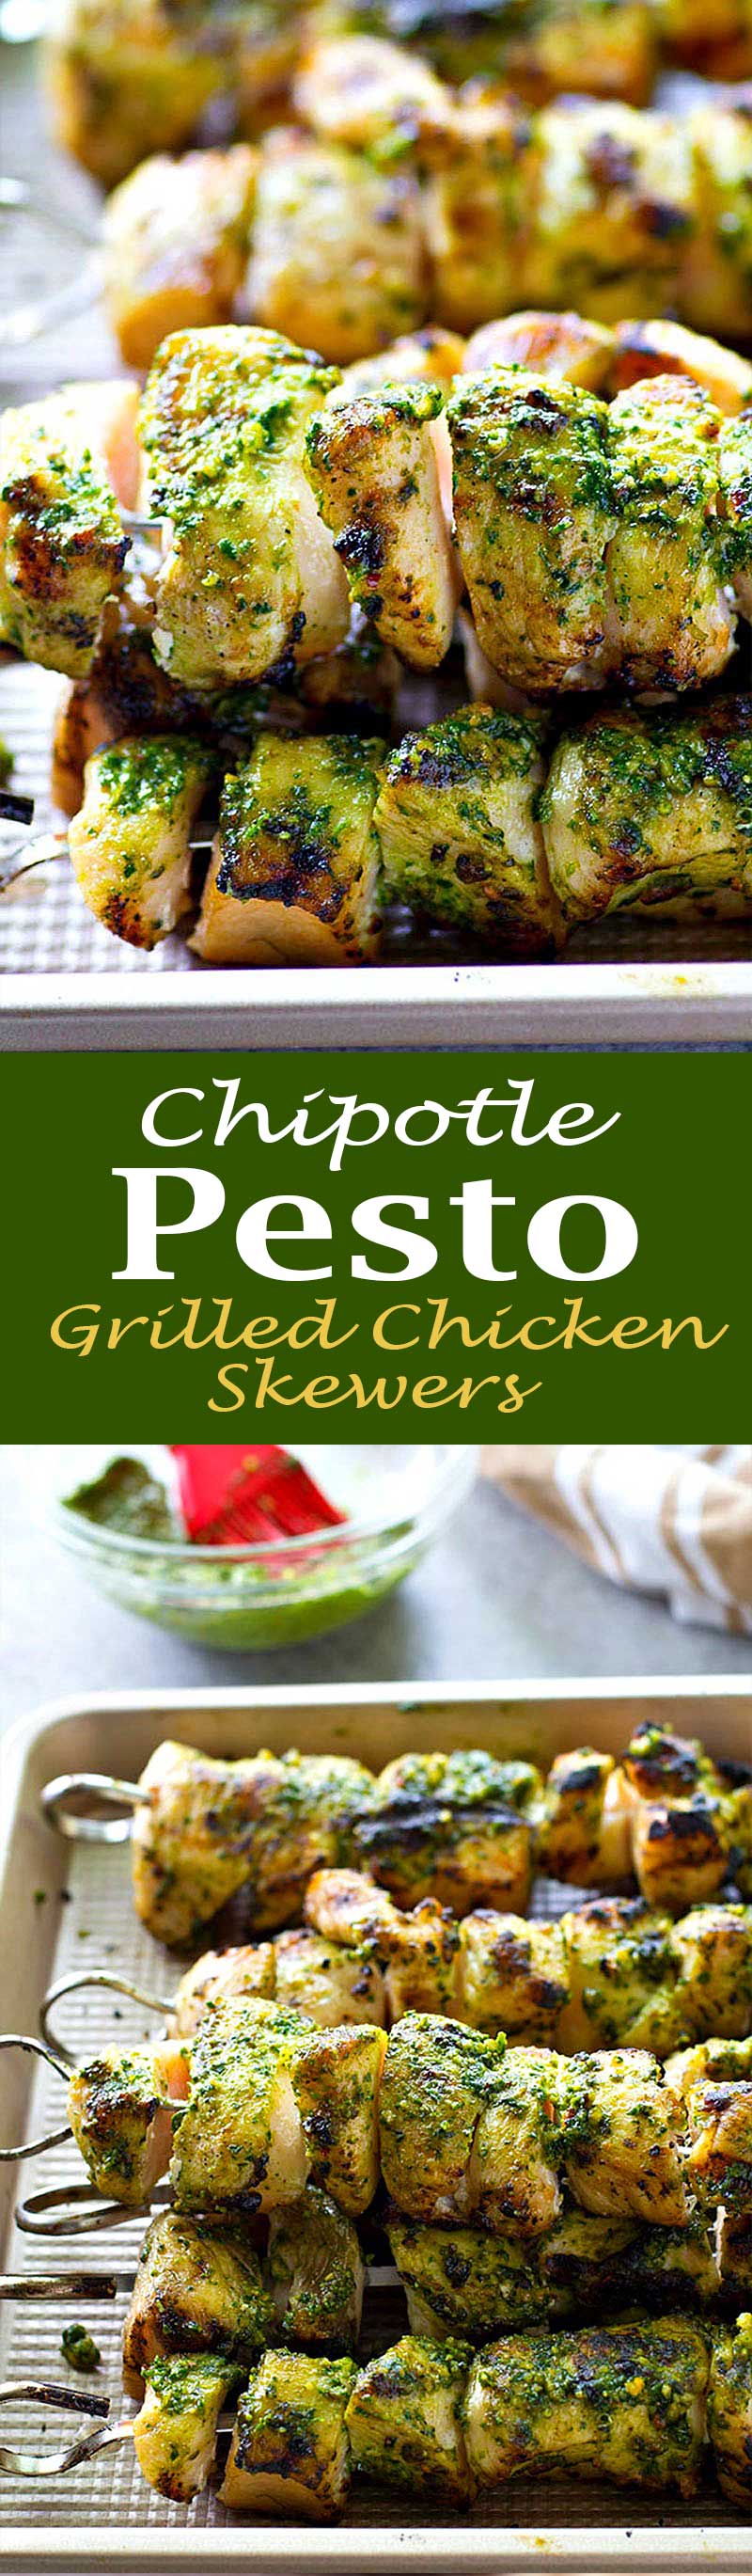 Chipotle Pesto Grilled Chicken Skewers